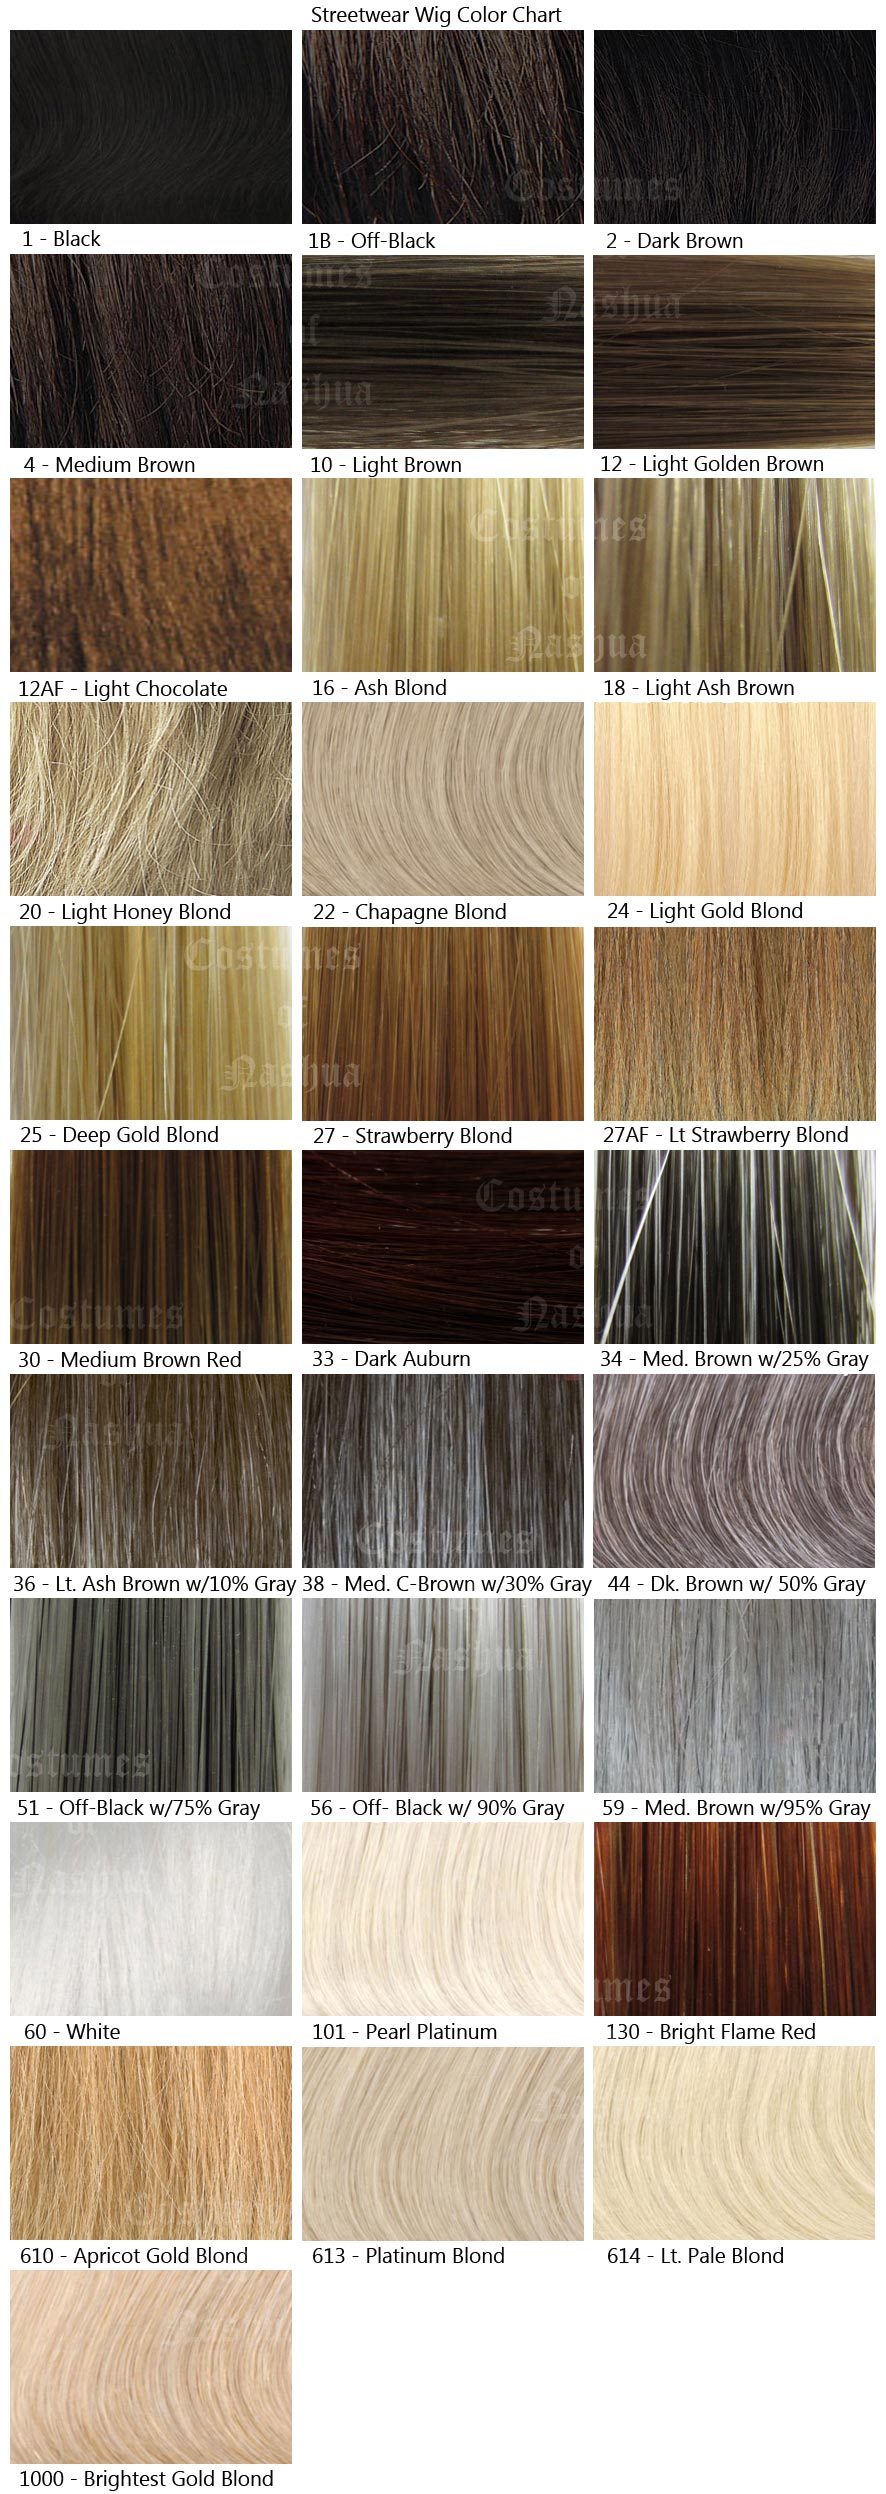 Streetwear Wig Hair Color Chart